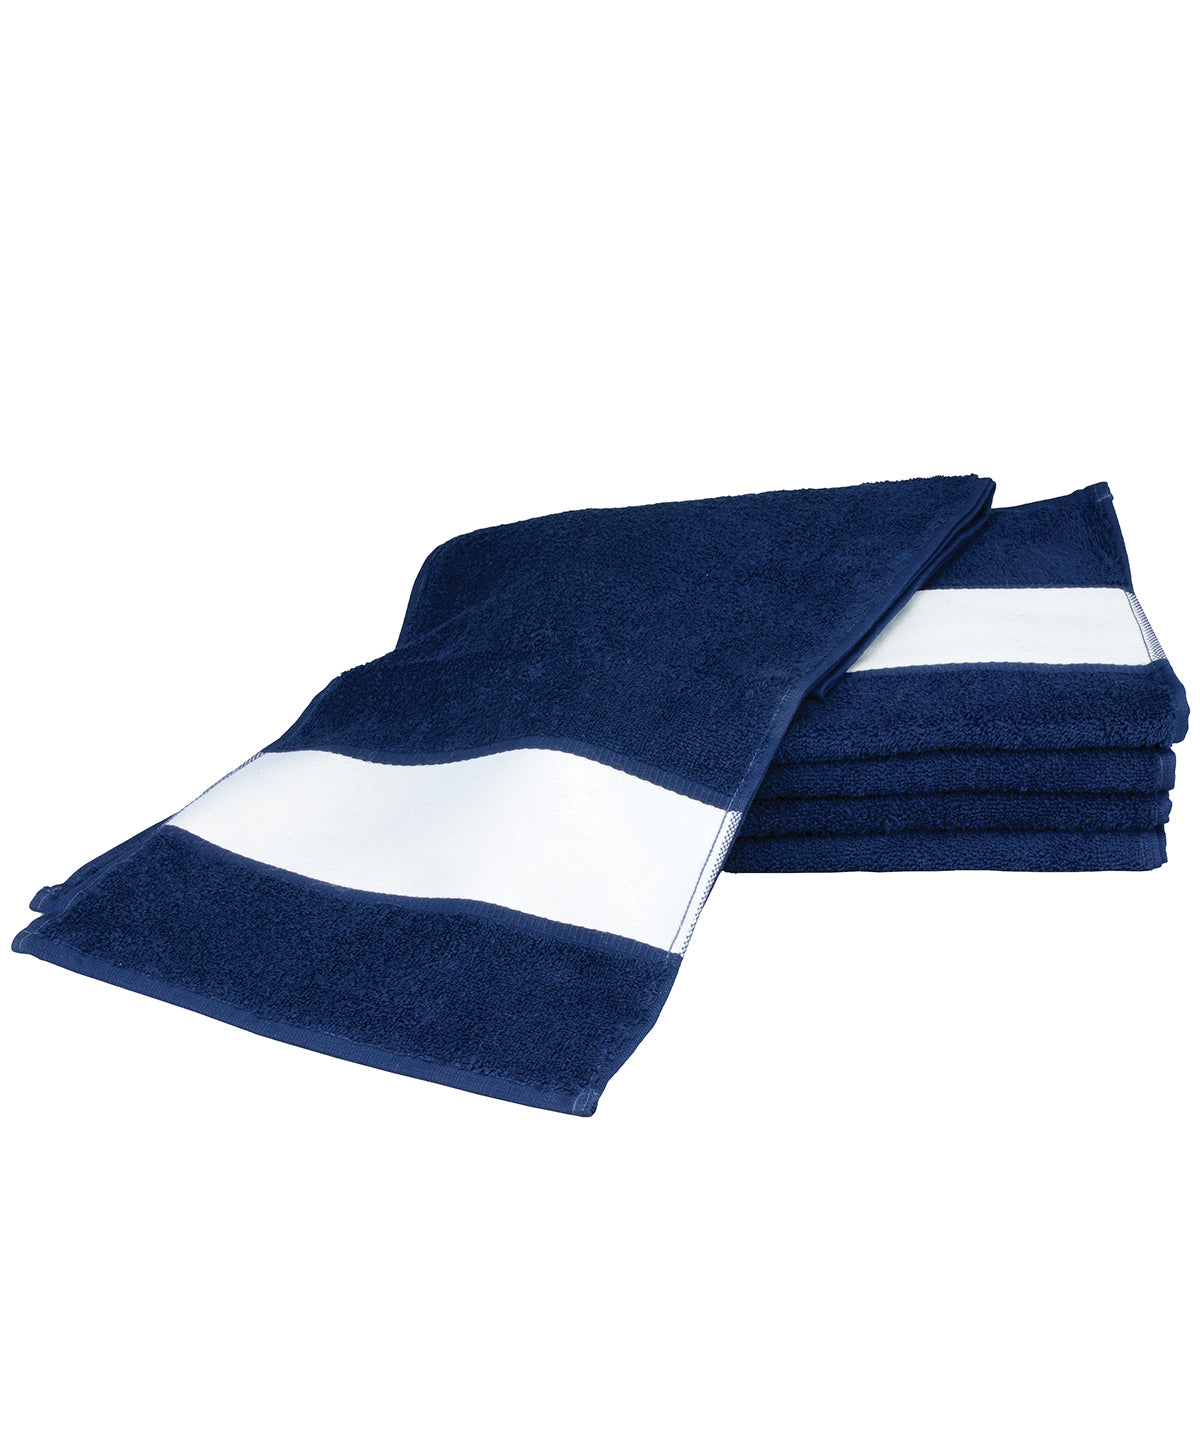 Personalised Towels - Navy A&R Towels ARTG® SUBLI-Me® sport towel